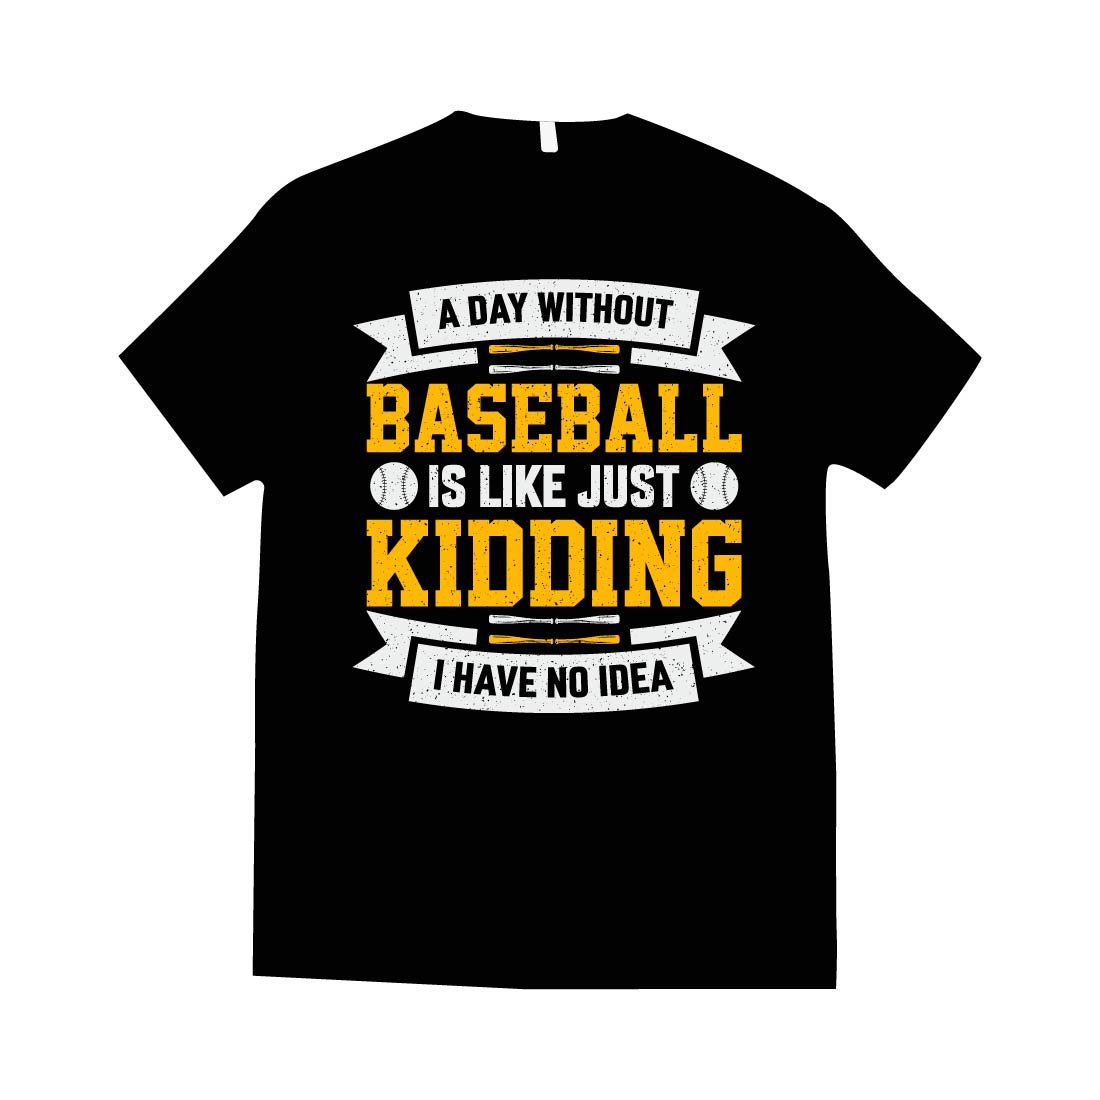 Baseball T-shirt Design preview image.